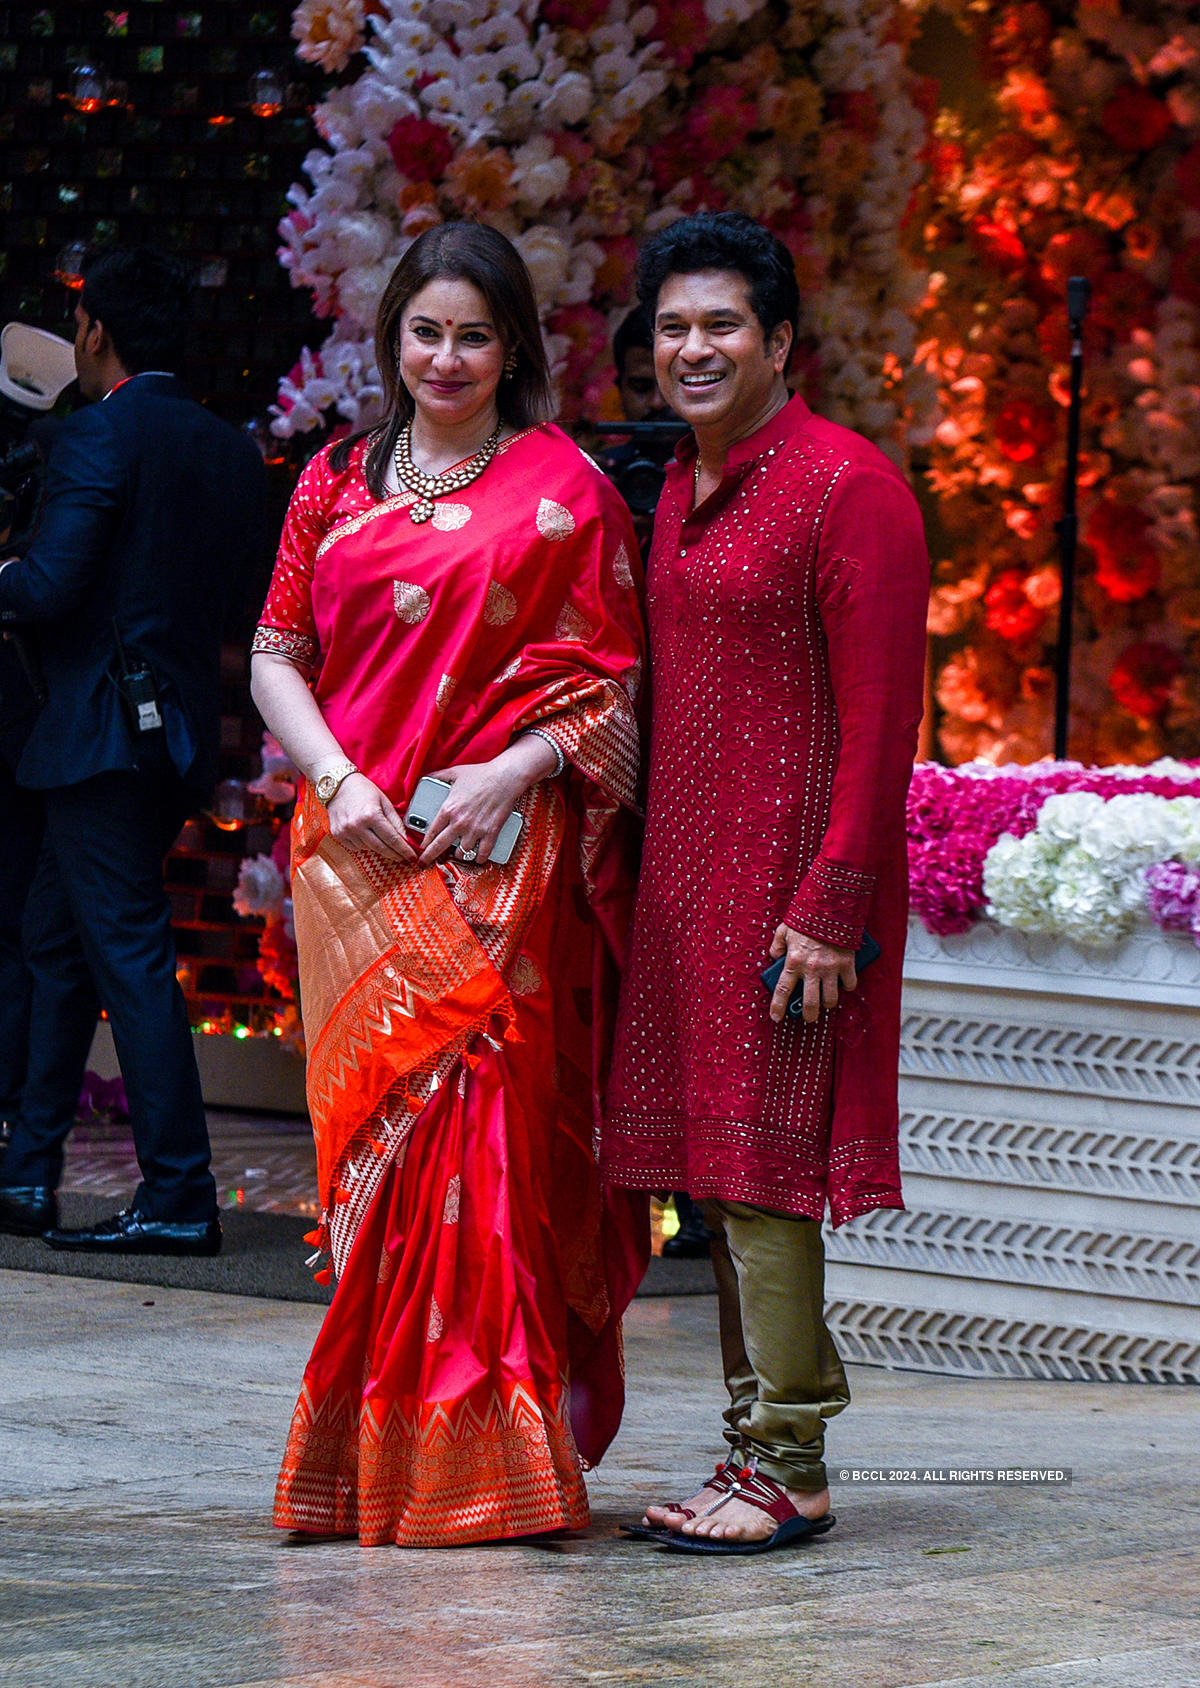 Priyanka & Nick's candid picture from Shloka Mehta and Akash Ambani's pre-engagement party